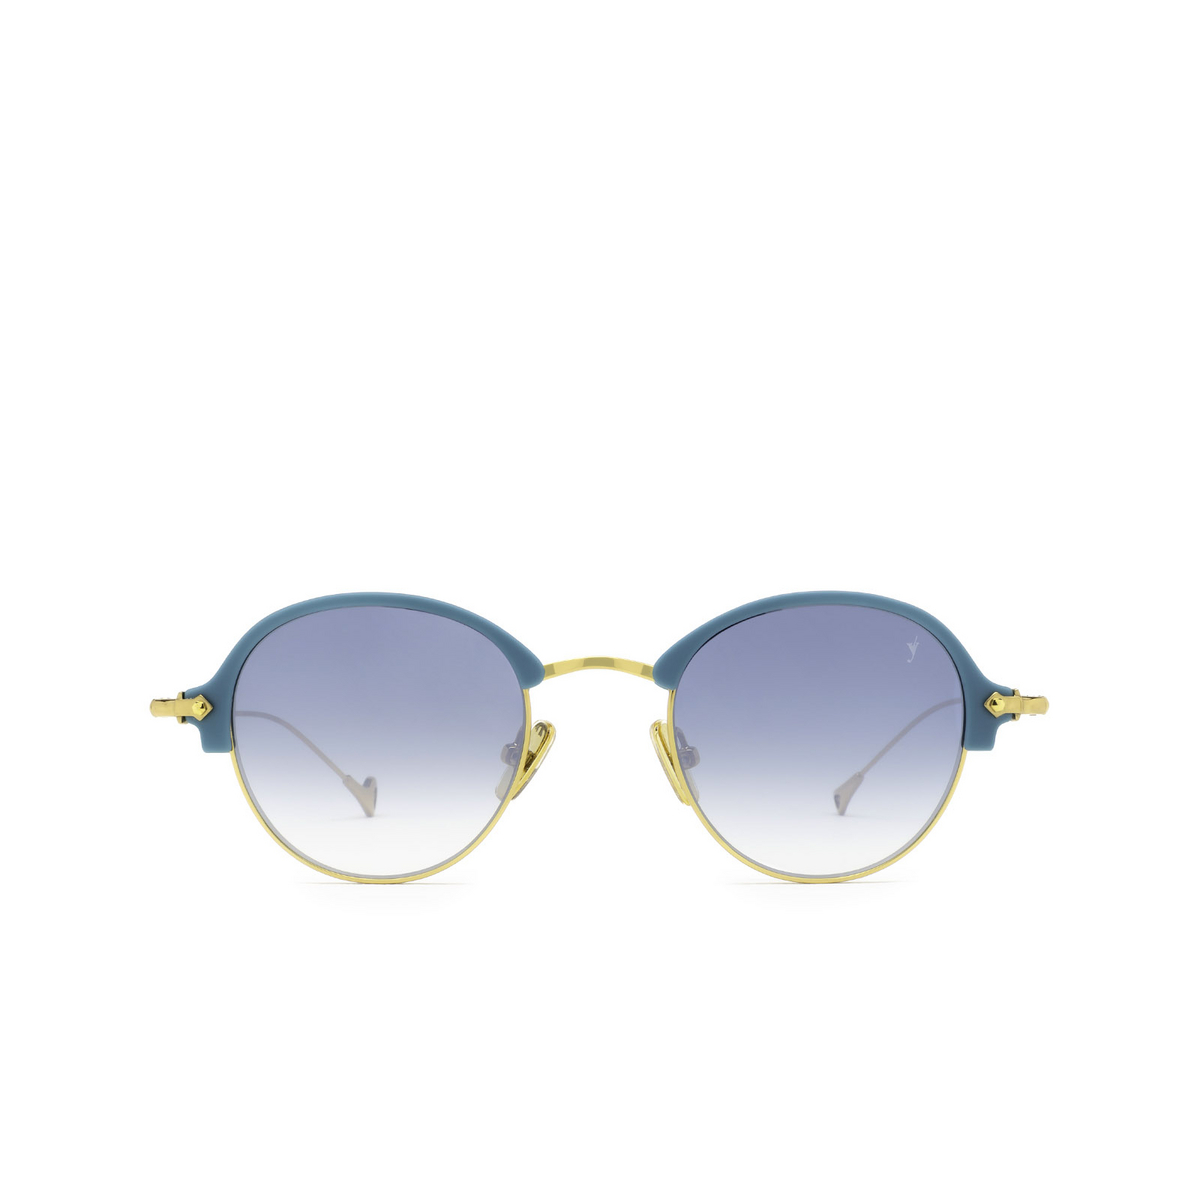 Eyepetizer® Round Sunglasses: Robert color Petrol Blue Matt C.P-4-26F - front view.